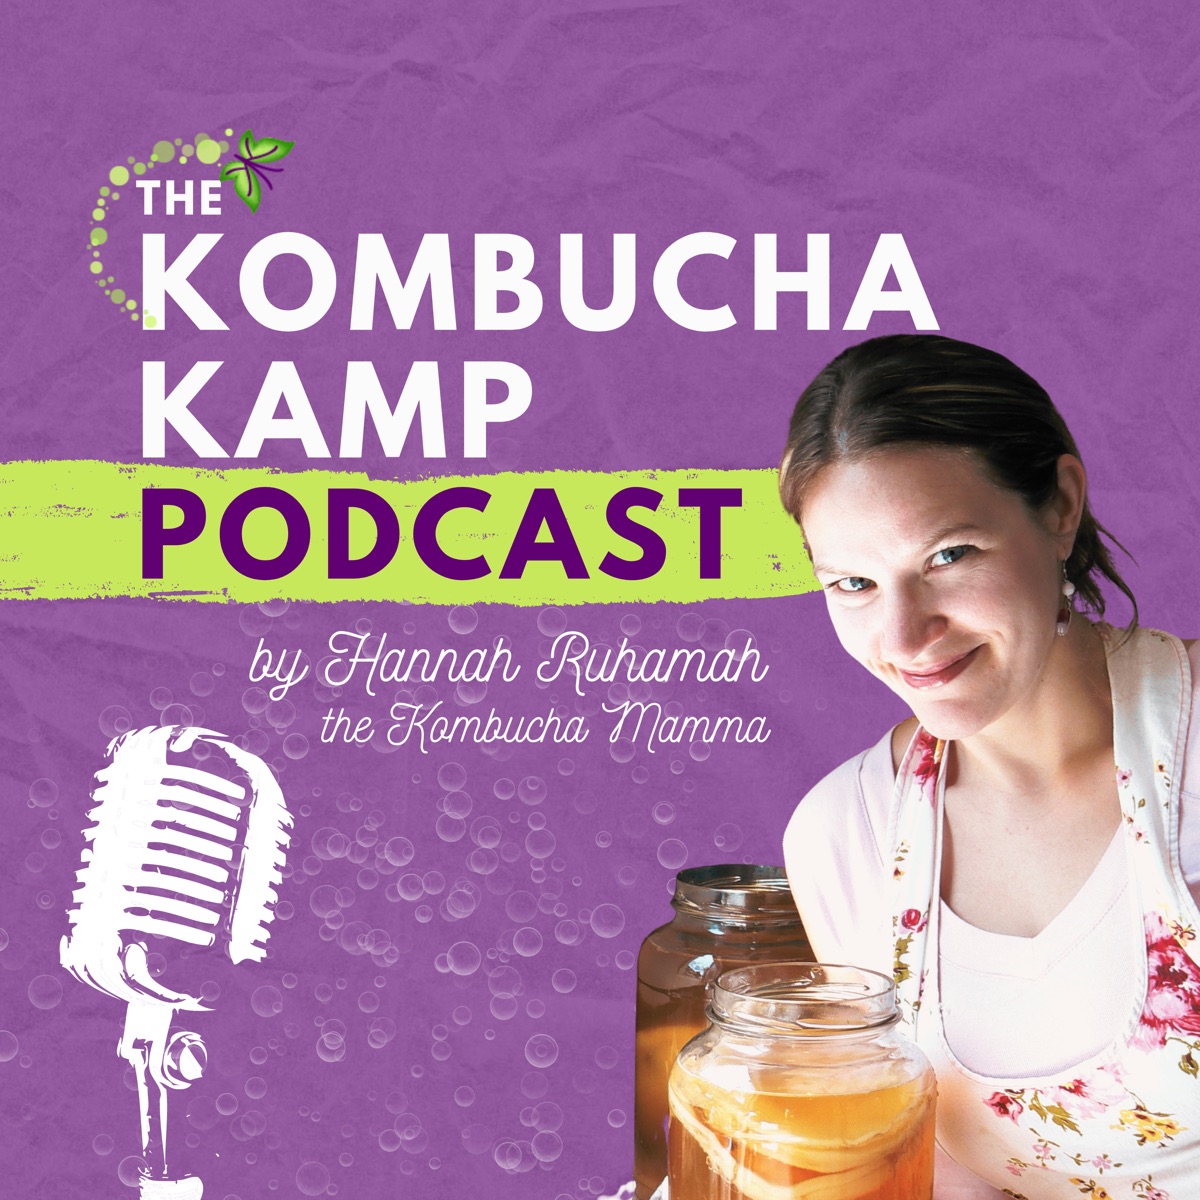 The Picky Eater: KOMBUCHA SOLUTIONS